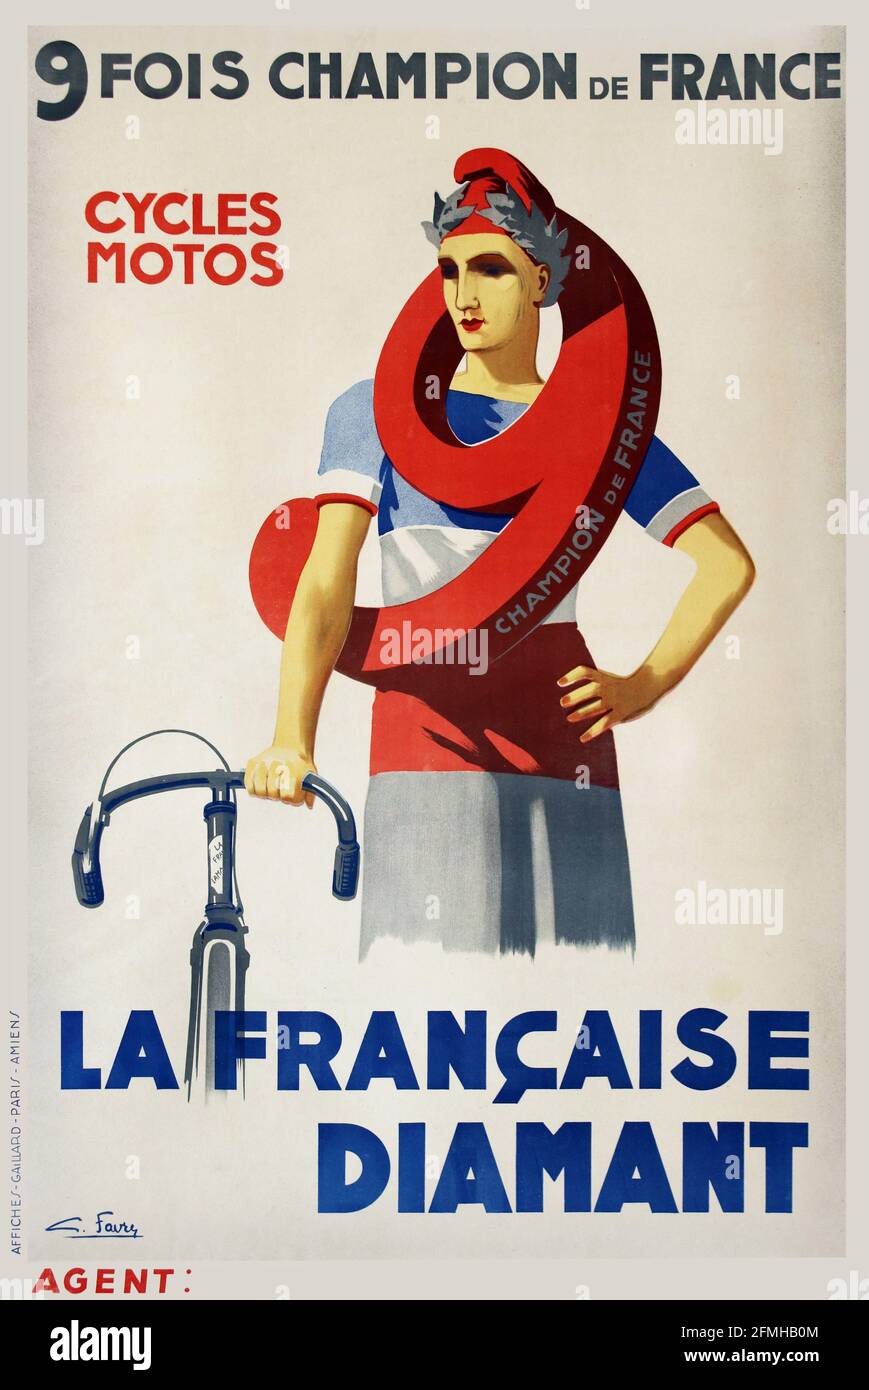 9 fois champion de France – Cycles Motos. La Francaise Diamant. Tour De France. Bicycle poster. Old and vintage. Digitally enhanced. Artist: Favre. Stock Photo